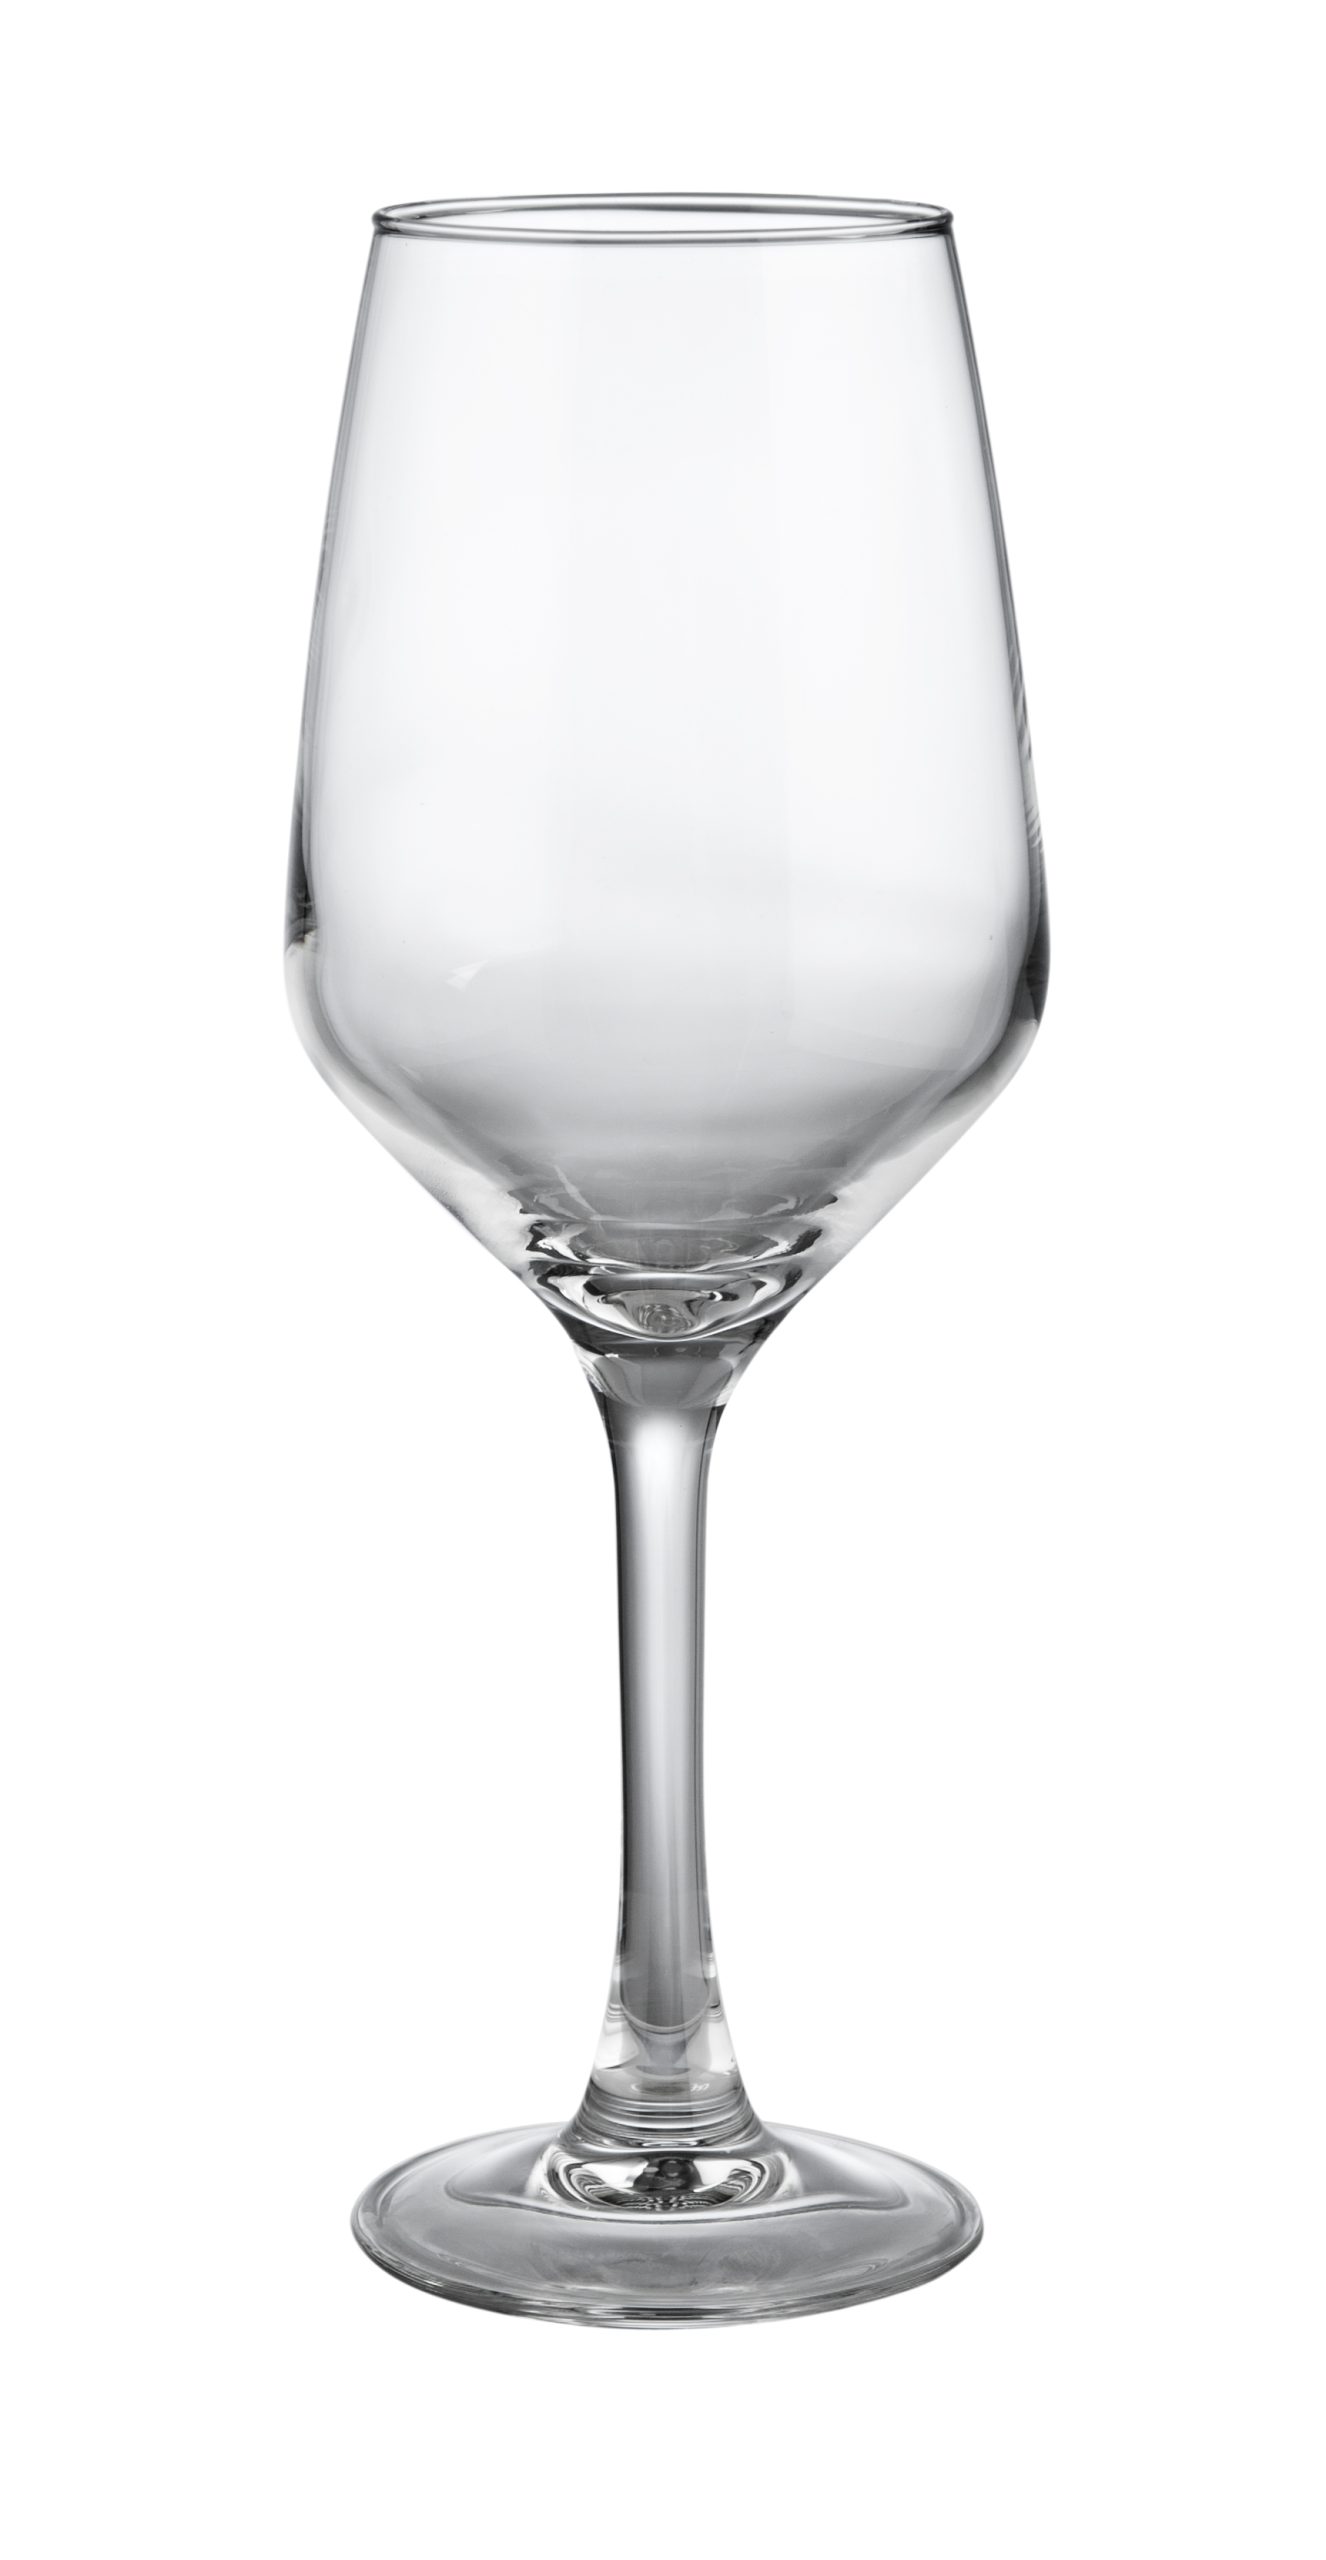 MENCIA 44 WINE GLASS Tempered HOSTELVIA VICRILA SPAIN ®